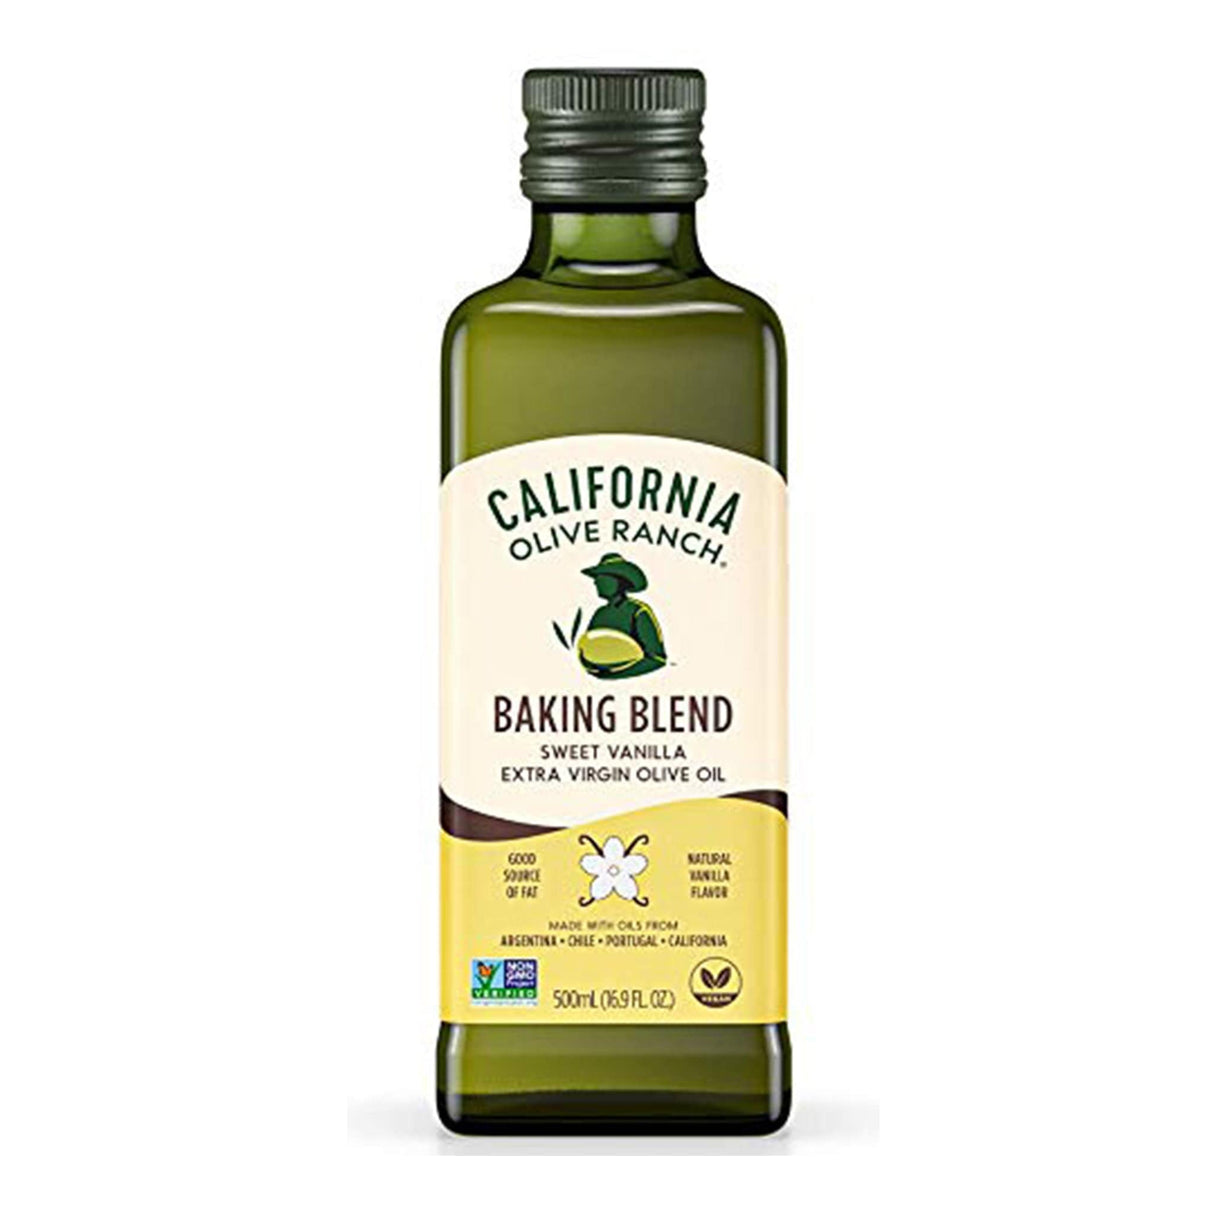 California Olive Ranch Baking Blend Sweet Vanilla Extra Virgin Olive Oil